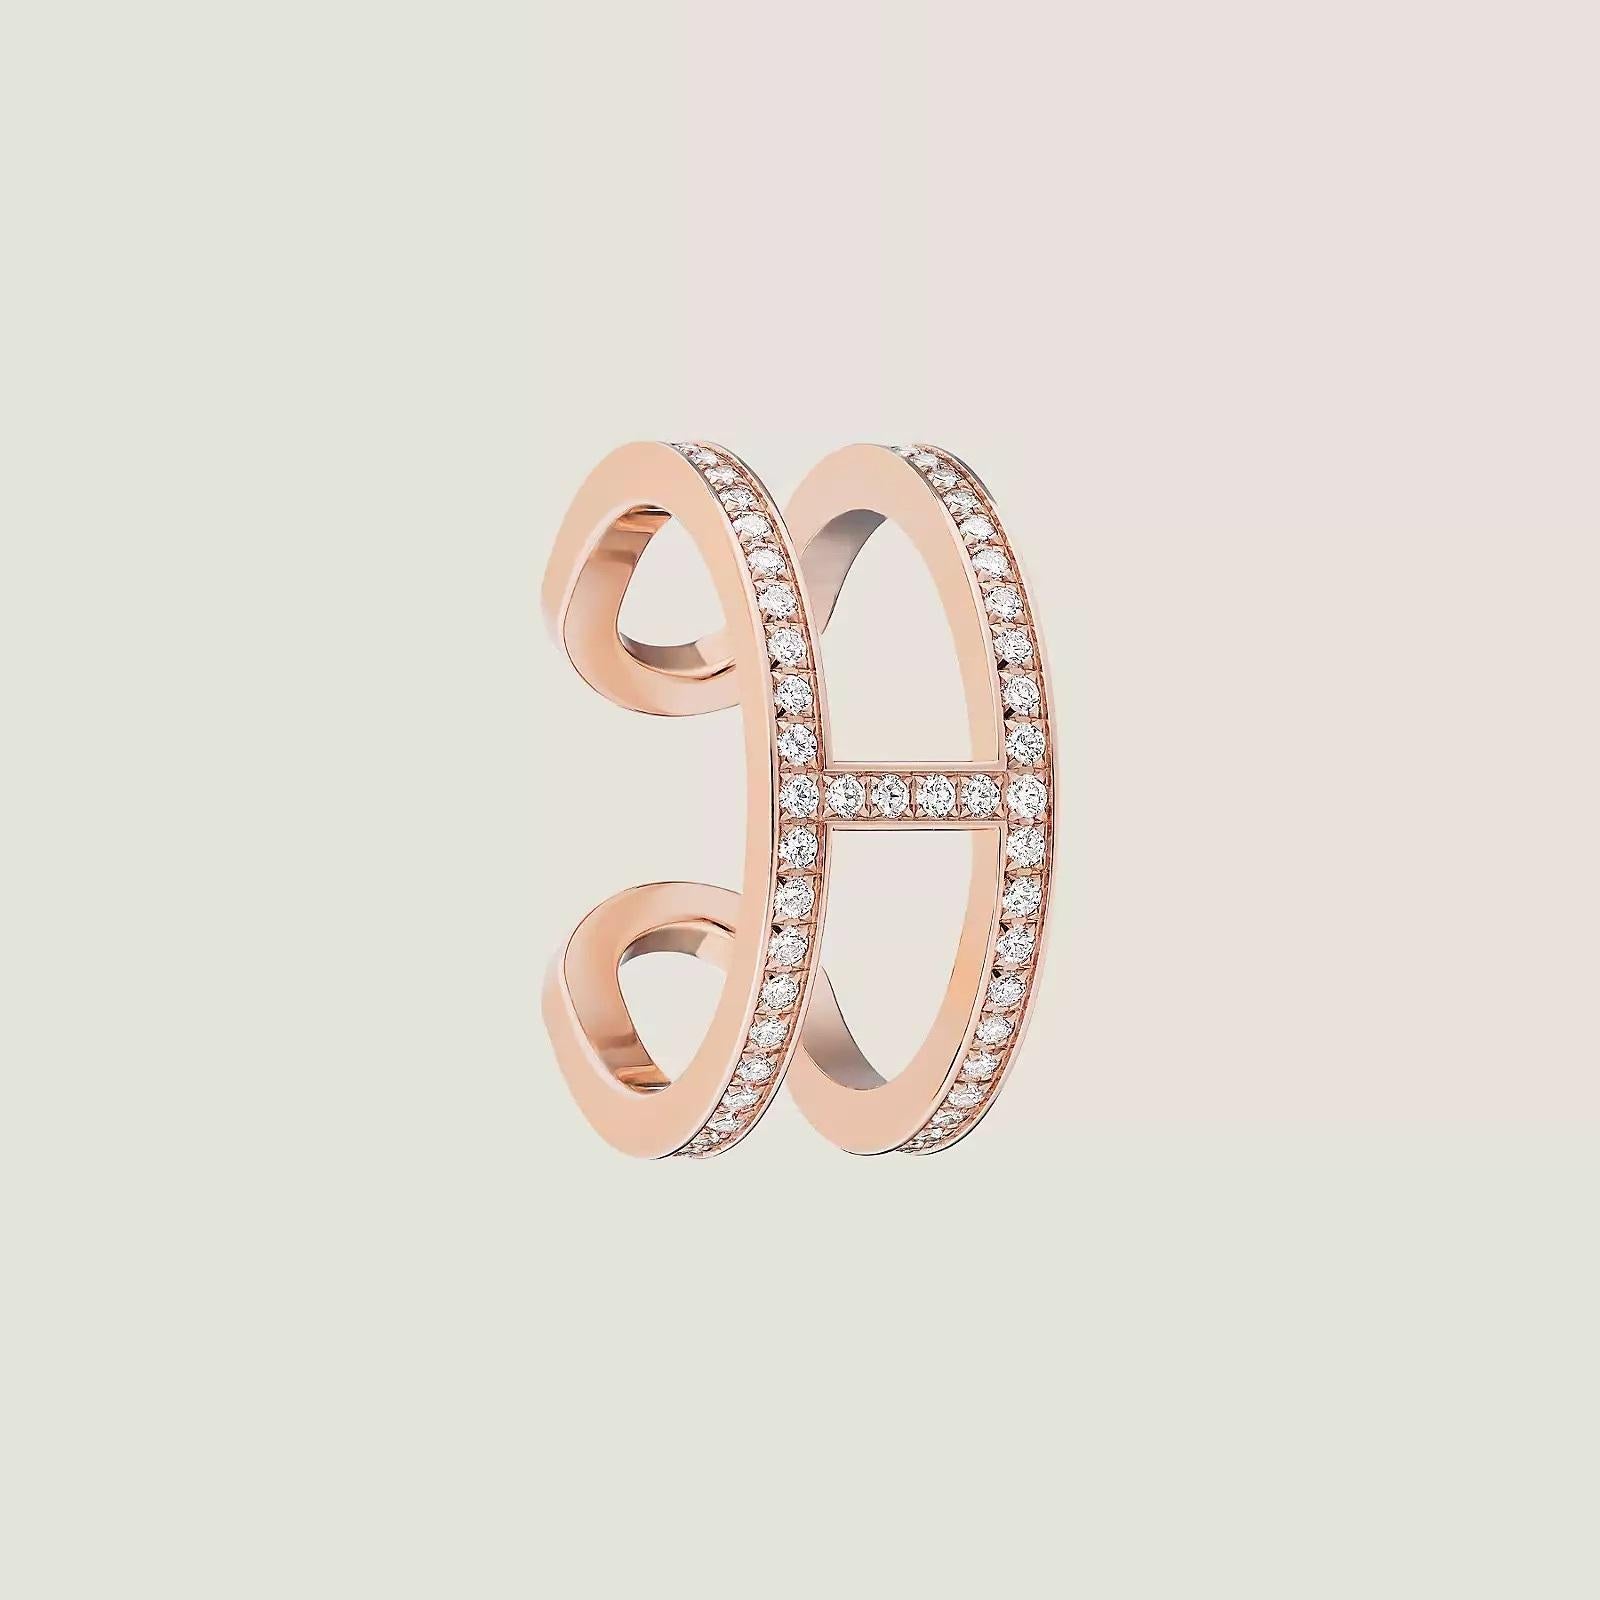 Women's Hermes Ever Chaine d'Ancre ring, medium model rose gold diamonds 53mm us 6 1/2